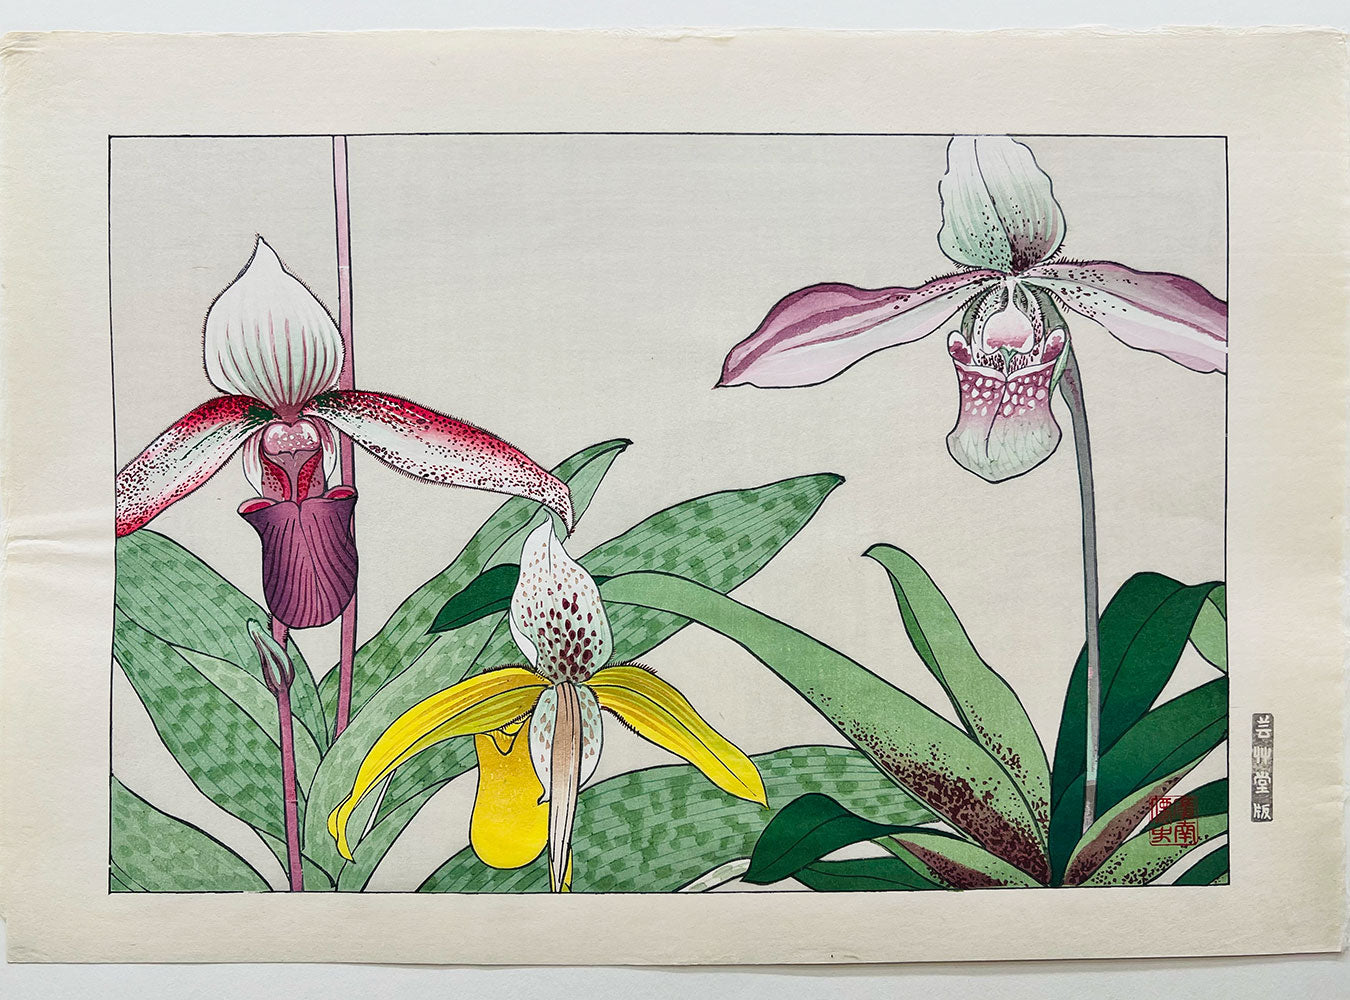 Woodblock print "Cypripedium flower" by Tanigami Konan published by UNSODO